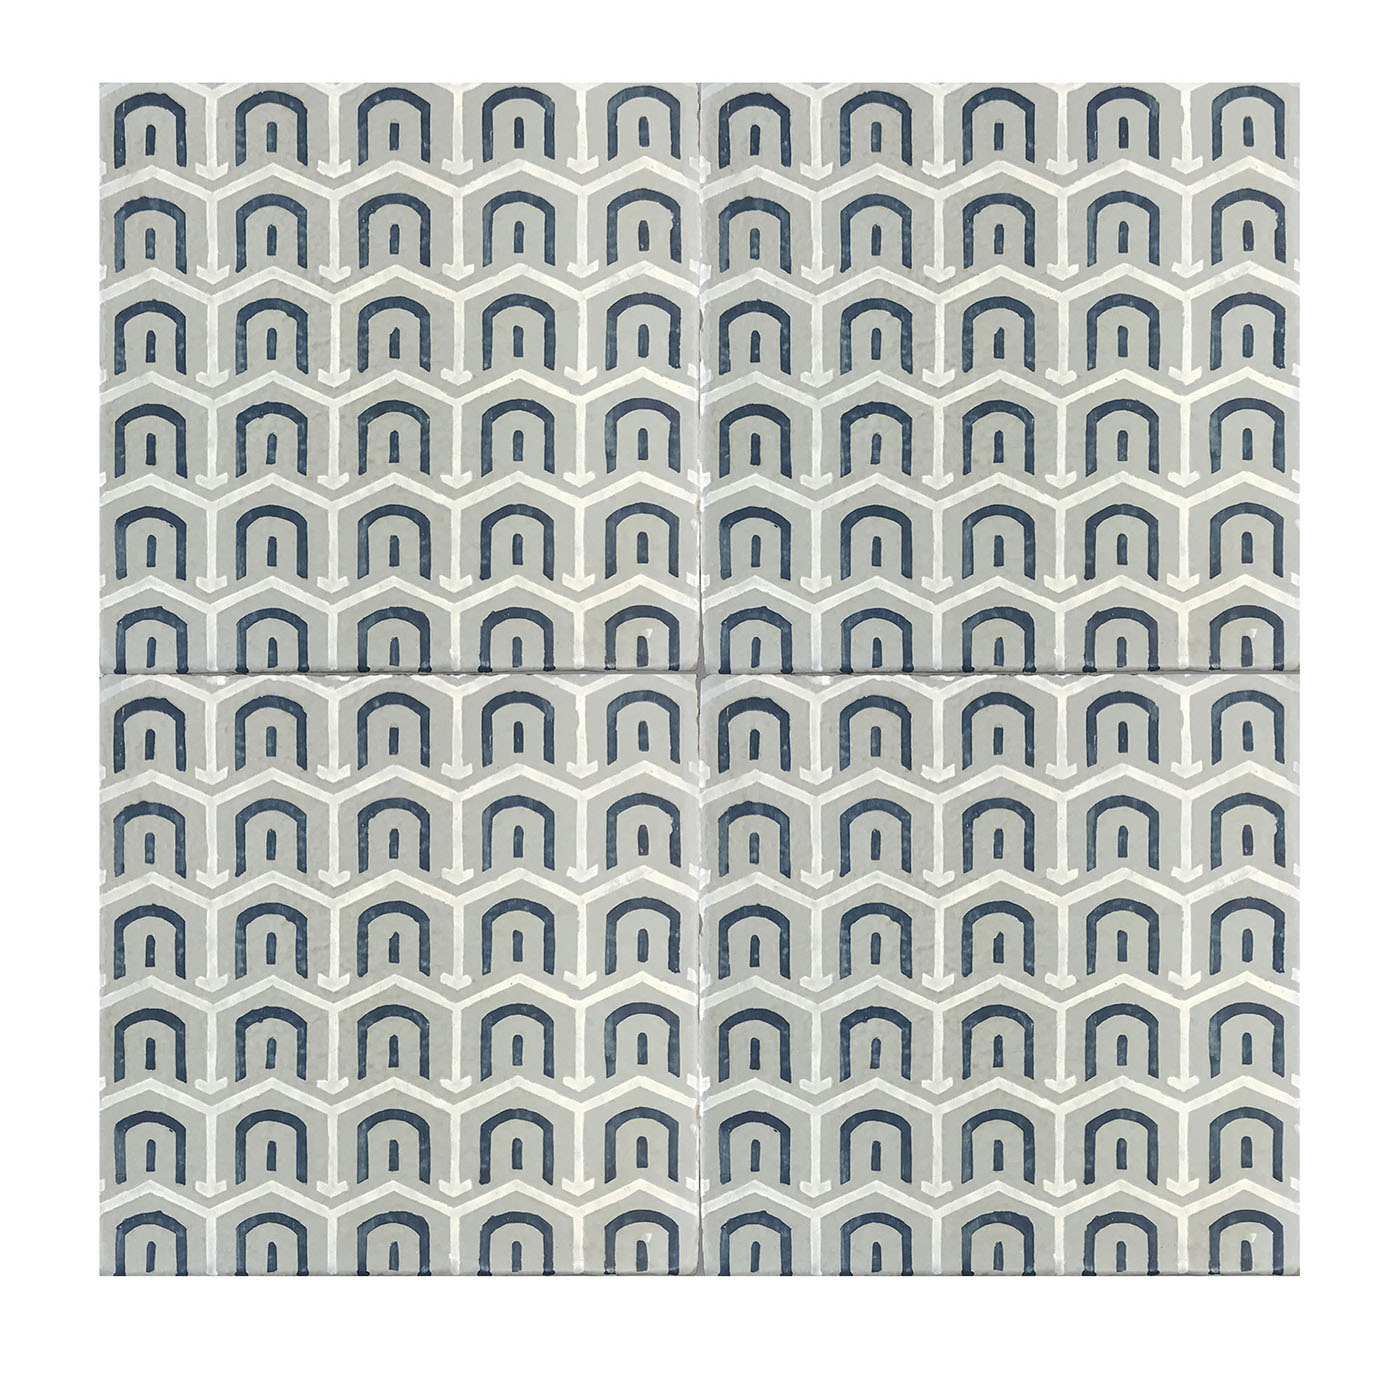 Daamè Set of 25 Square Gray Tiles #2 - Main view